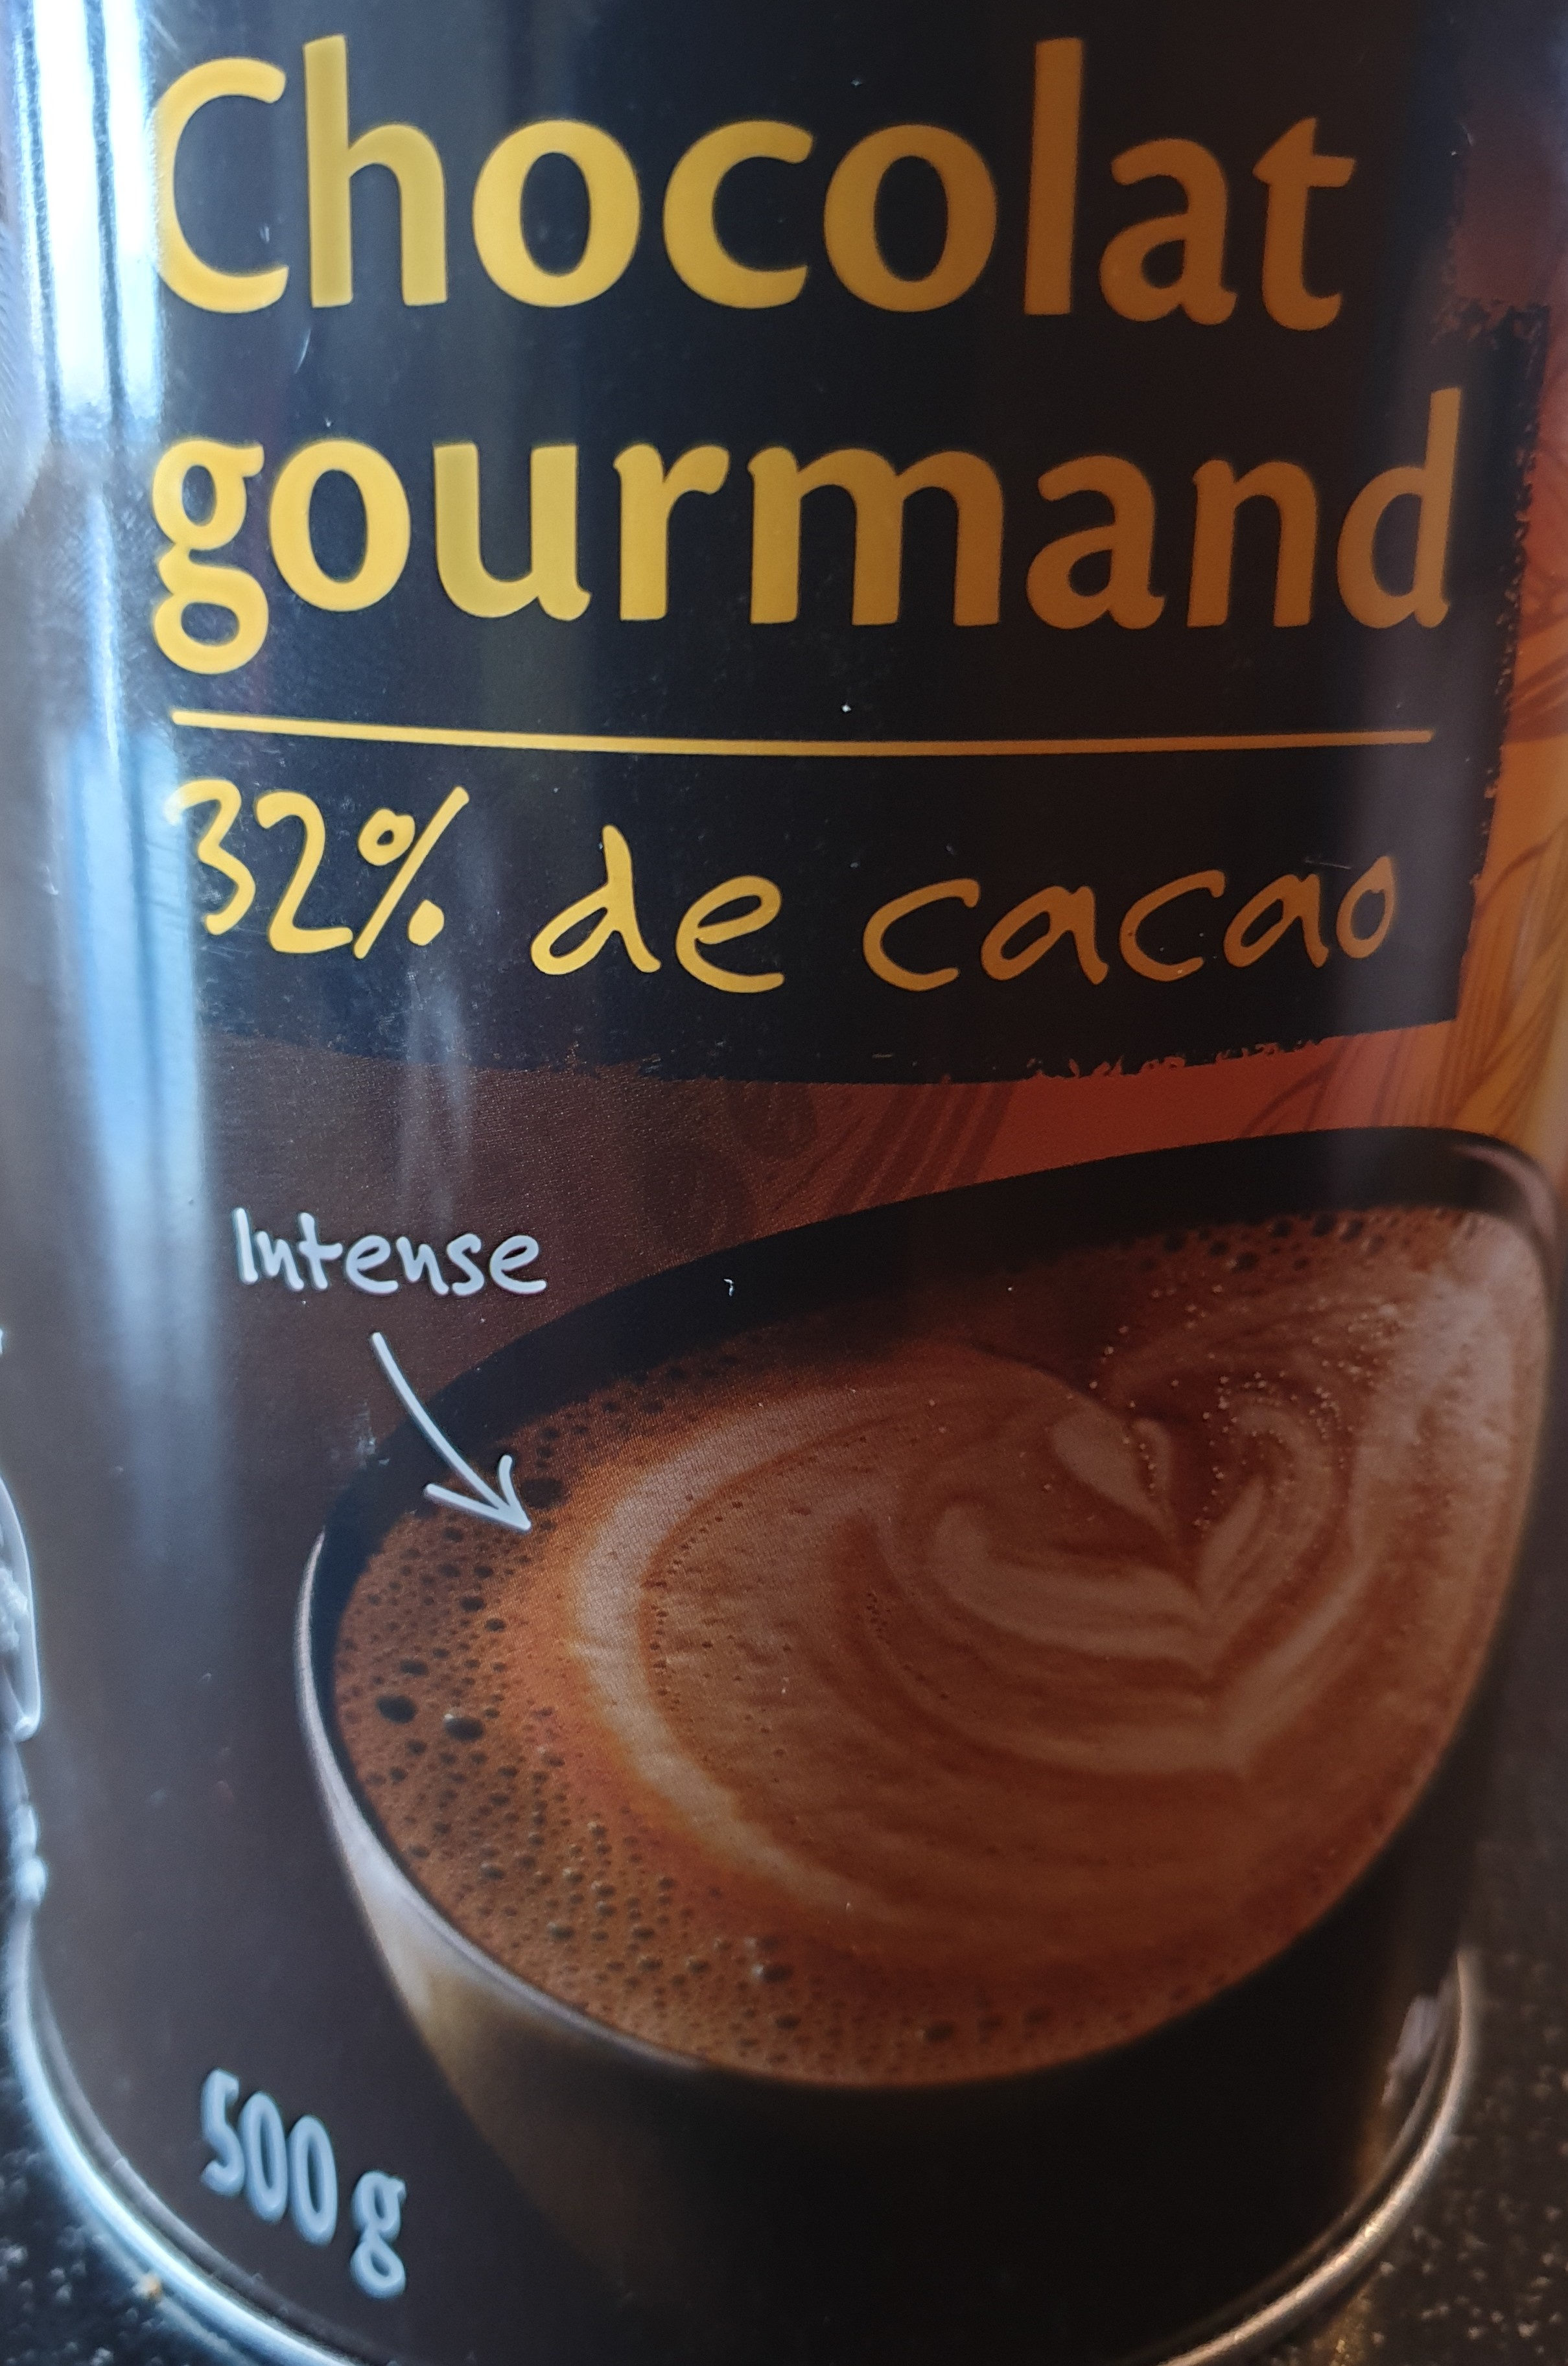 chocolat gourmand - Product - fr